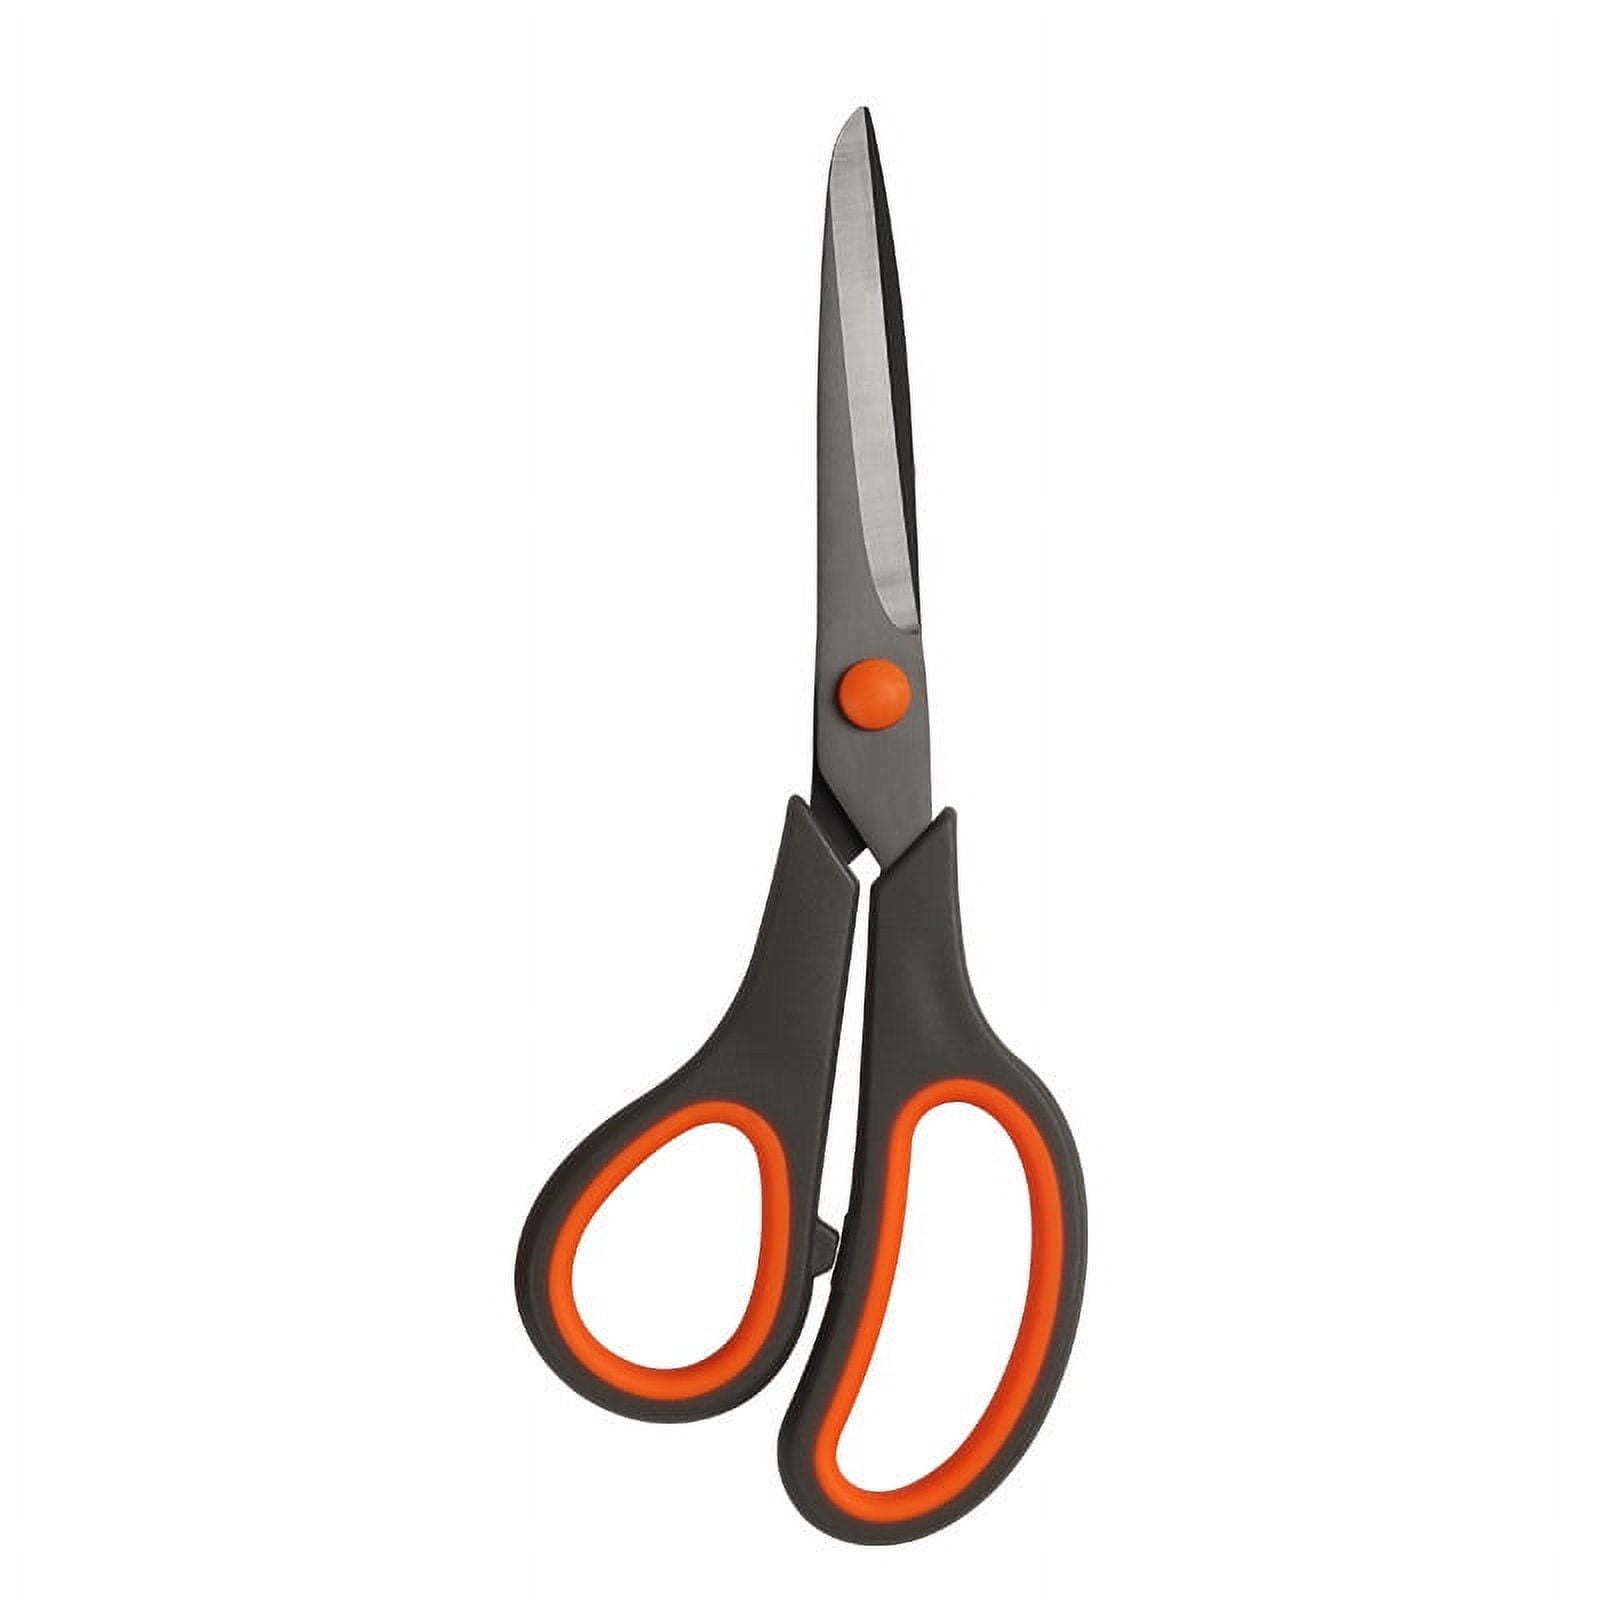 Scissors,Multipurpose office Scissors,8.5 Inch Ultra Sharp Shears,  Comfort-Grip Handles Household scissorsSturdy Sharp Craft Supplies - Pack  of 3, Right/Left Hande 